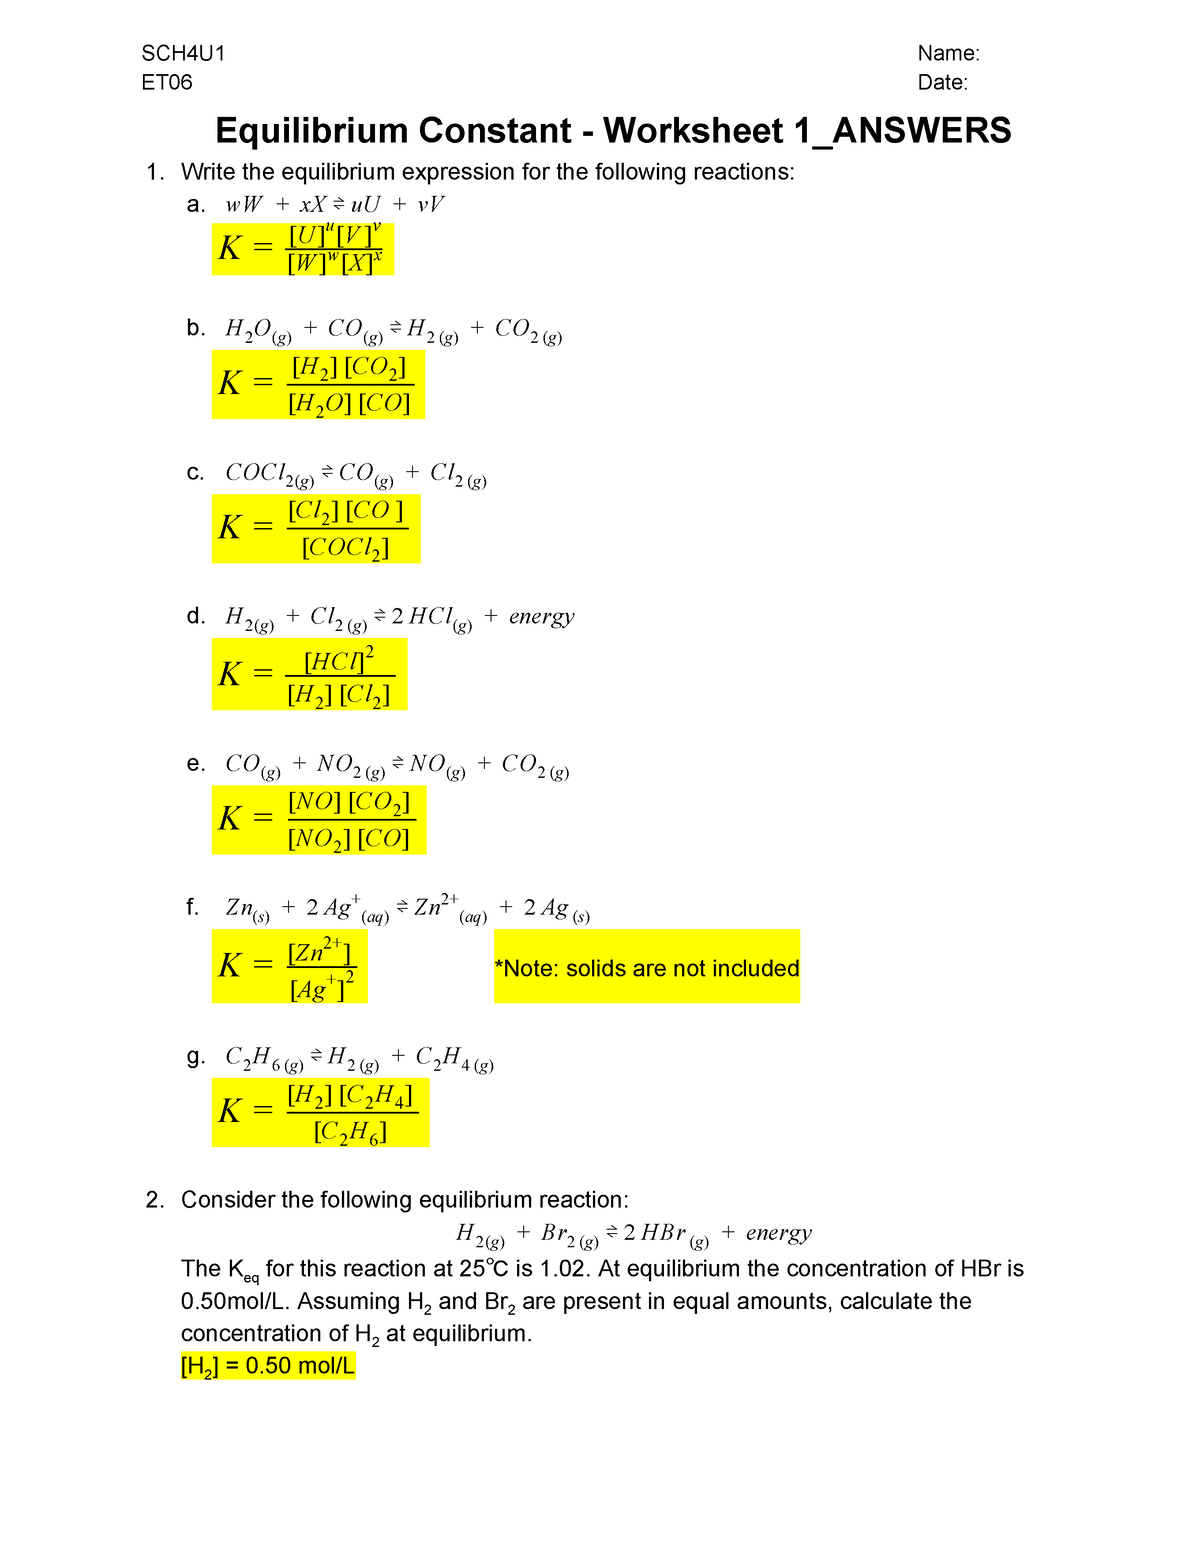 03-equilibrium-constant-worksheet-1-answers-sch4u1-name-et06-date-equilibrium-constant